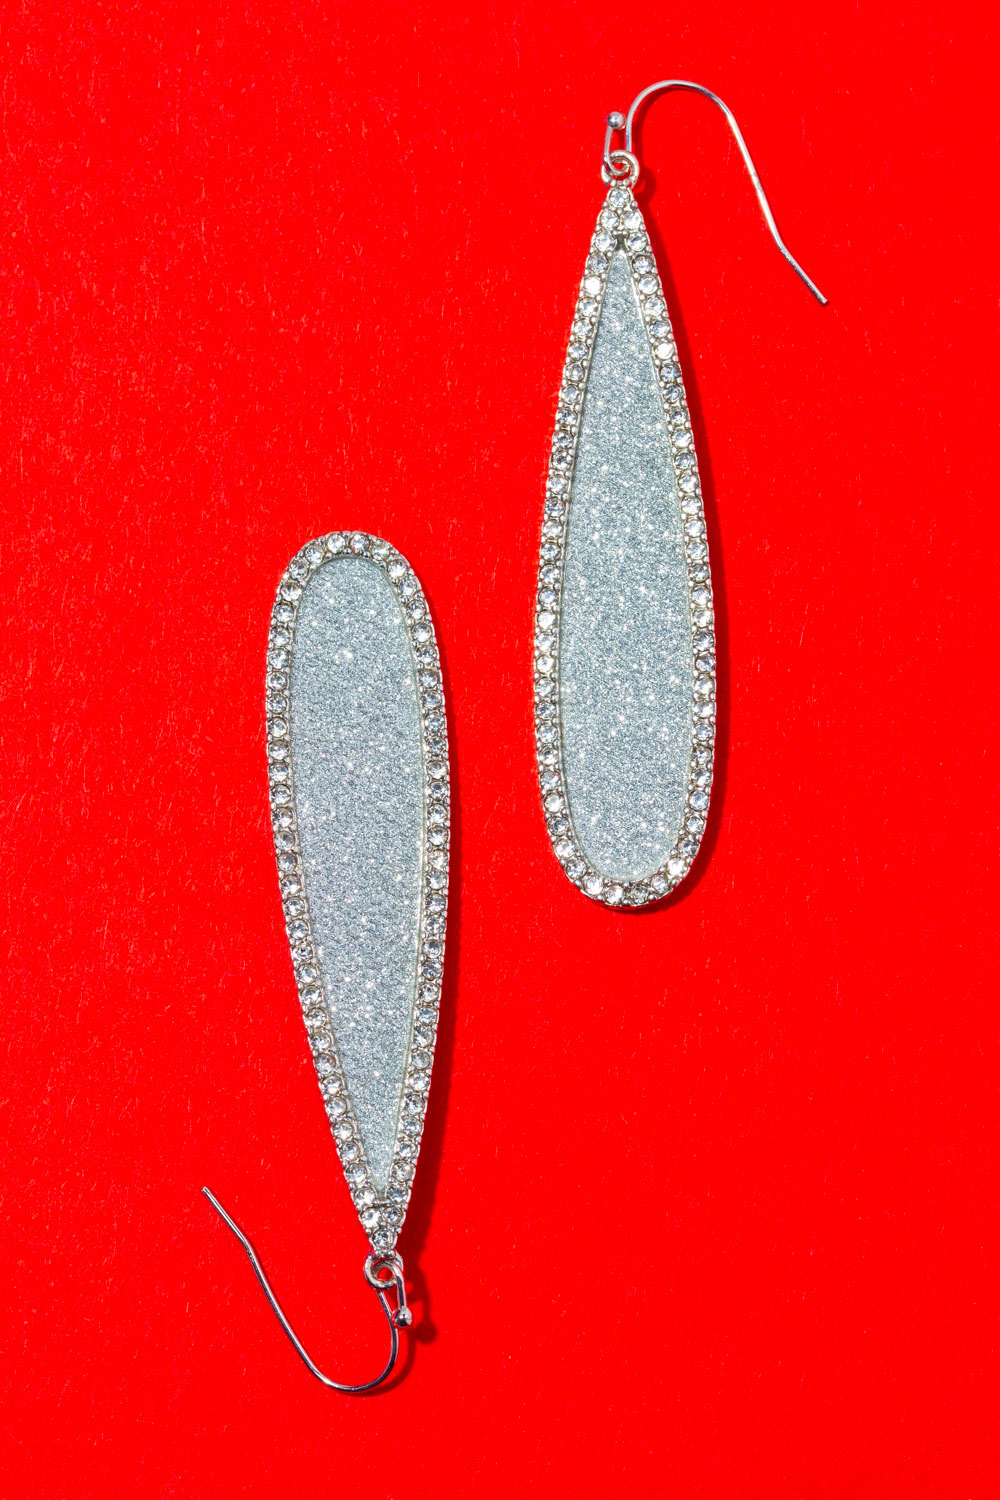 Type 4 Glitz & Glam Earrings